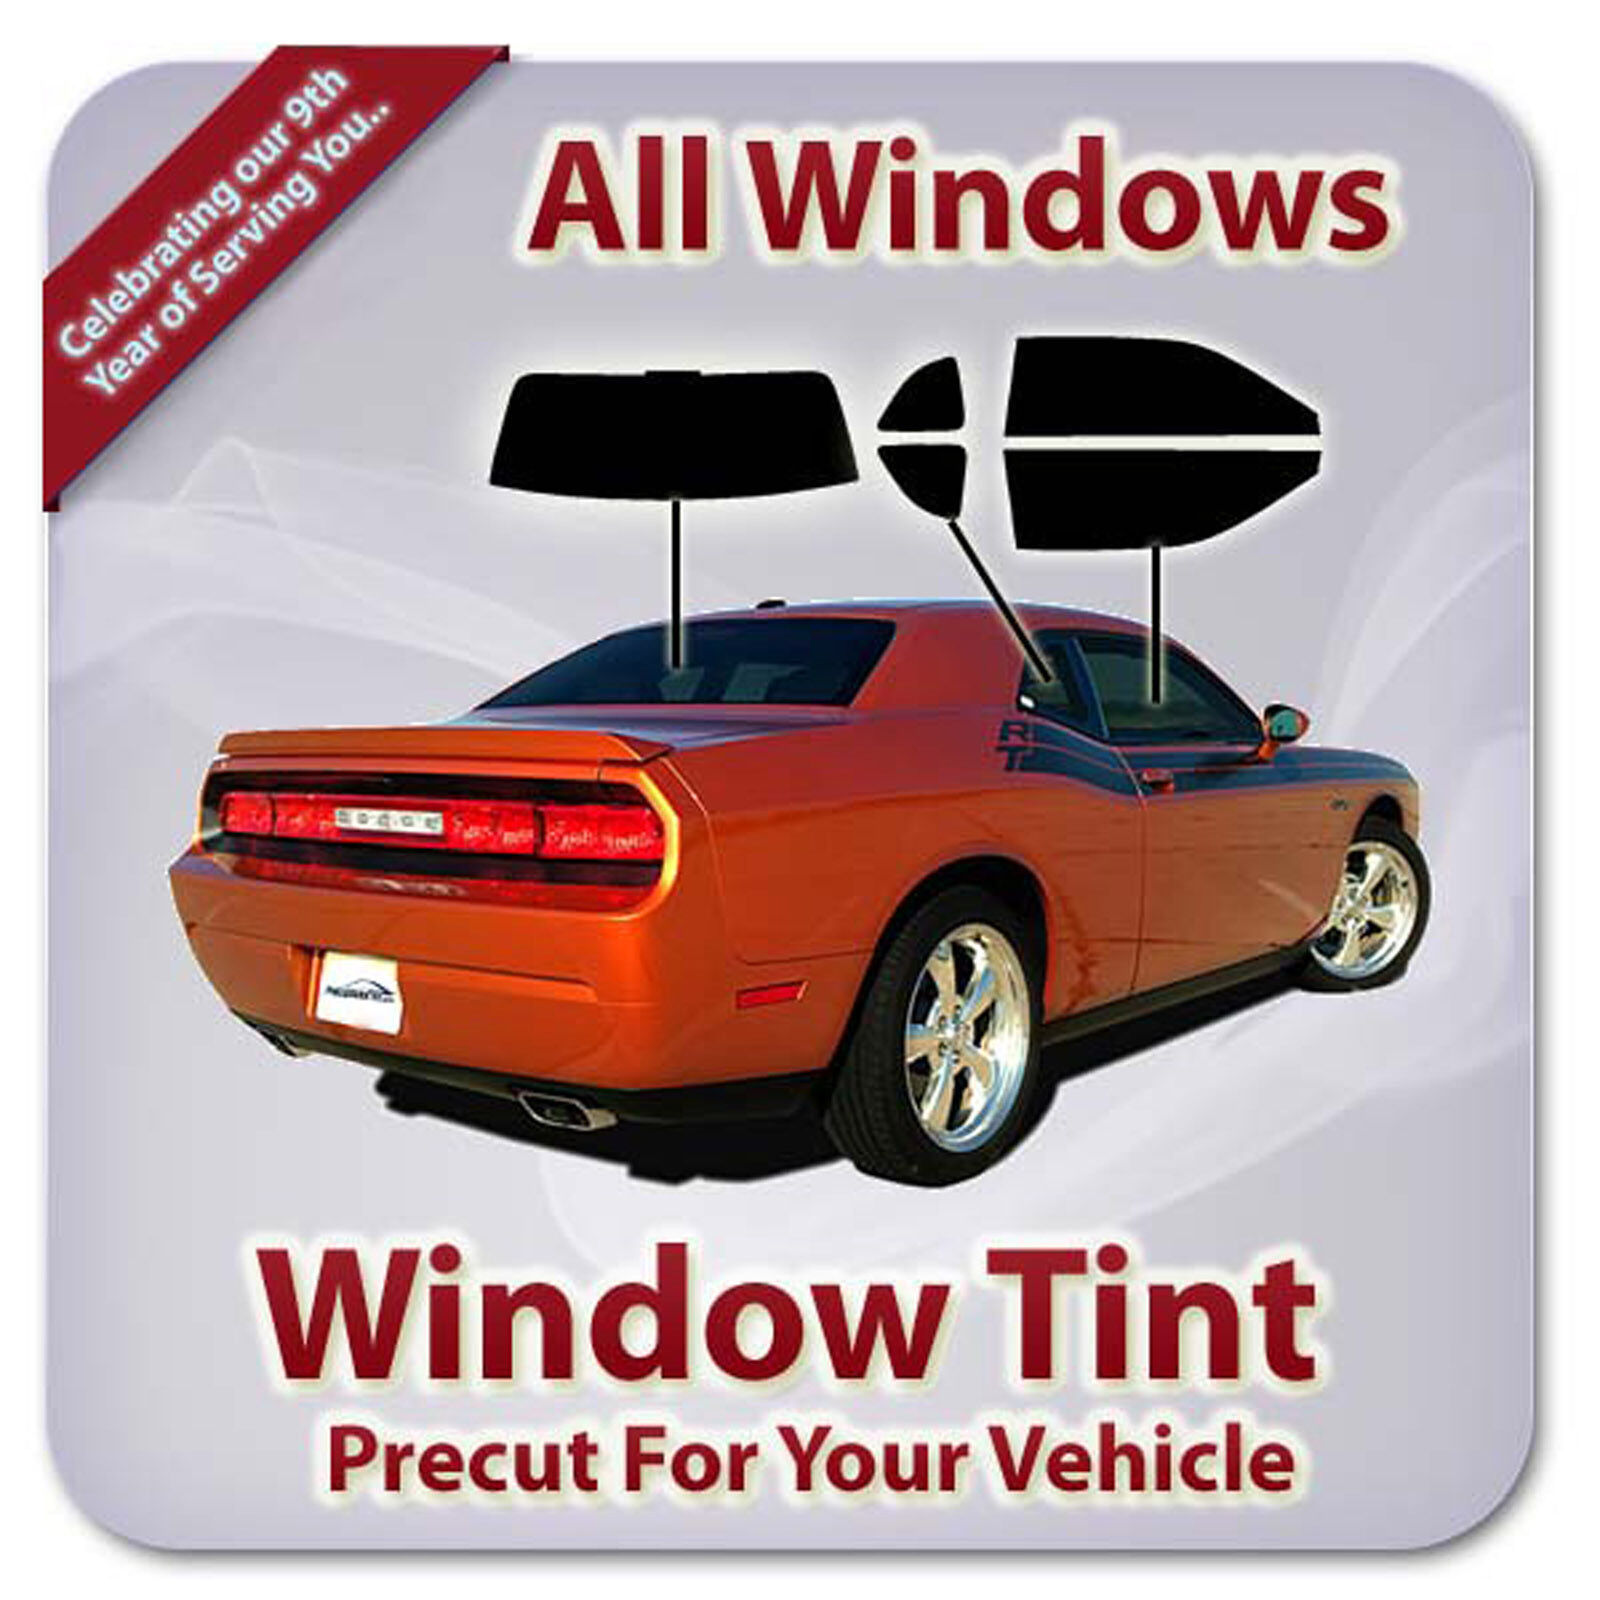 Precut Window Tint For Toyota Camry 4 Door 1997-2001 (All Windows)